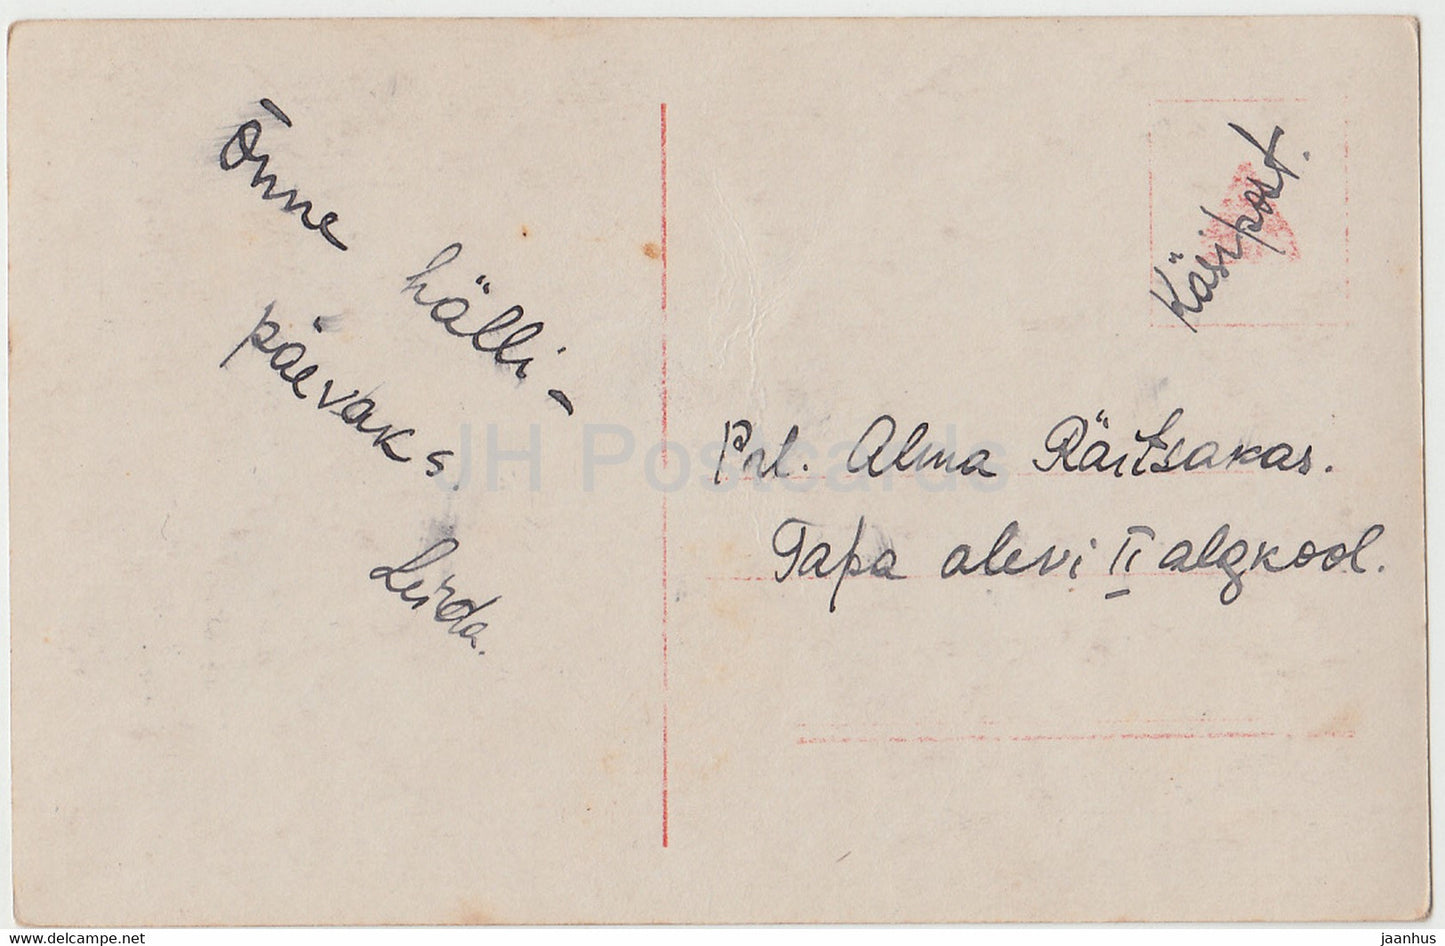 German actor Arnold Rieck - Film - Movie - 185 - Germany - old postcard - used